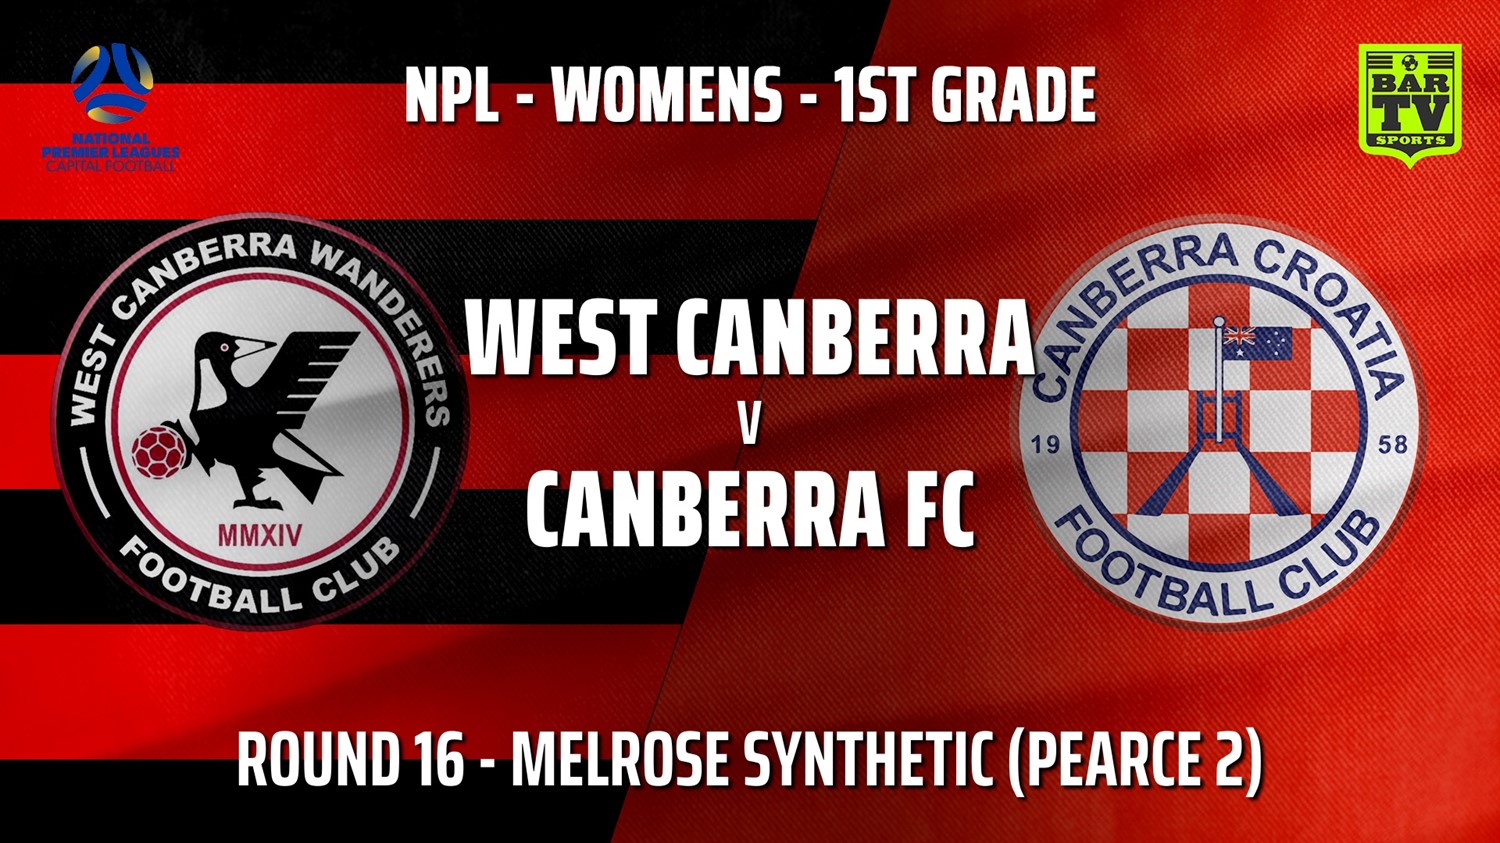 210801-Capital Womens Round 16 - West Canberra Wanderers FC (women) v Canberra FC (women) Slate Image